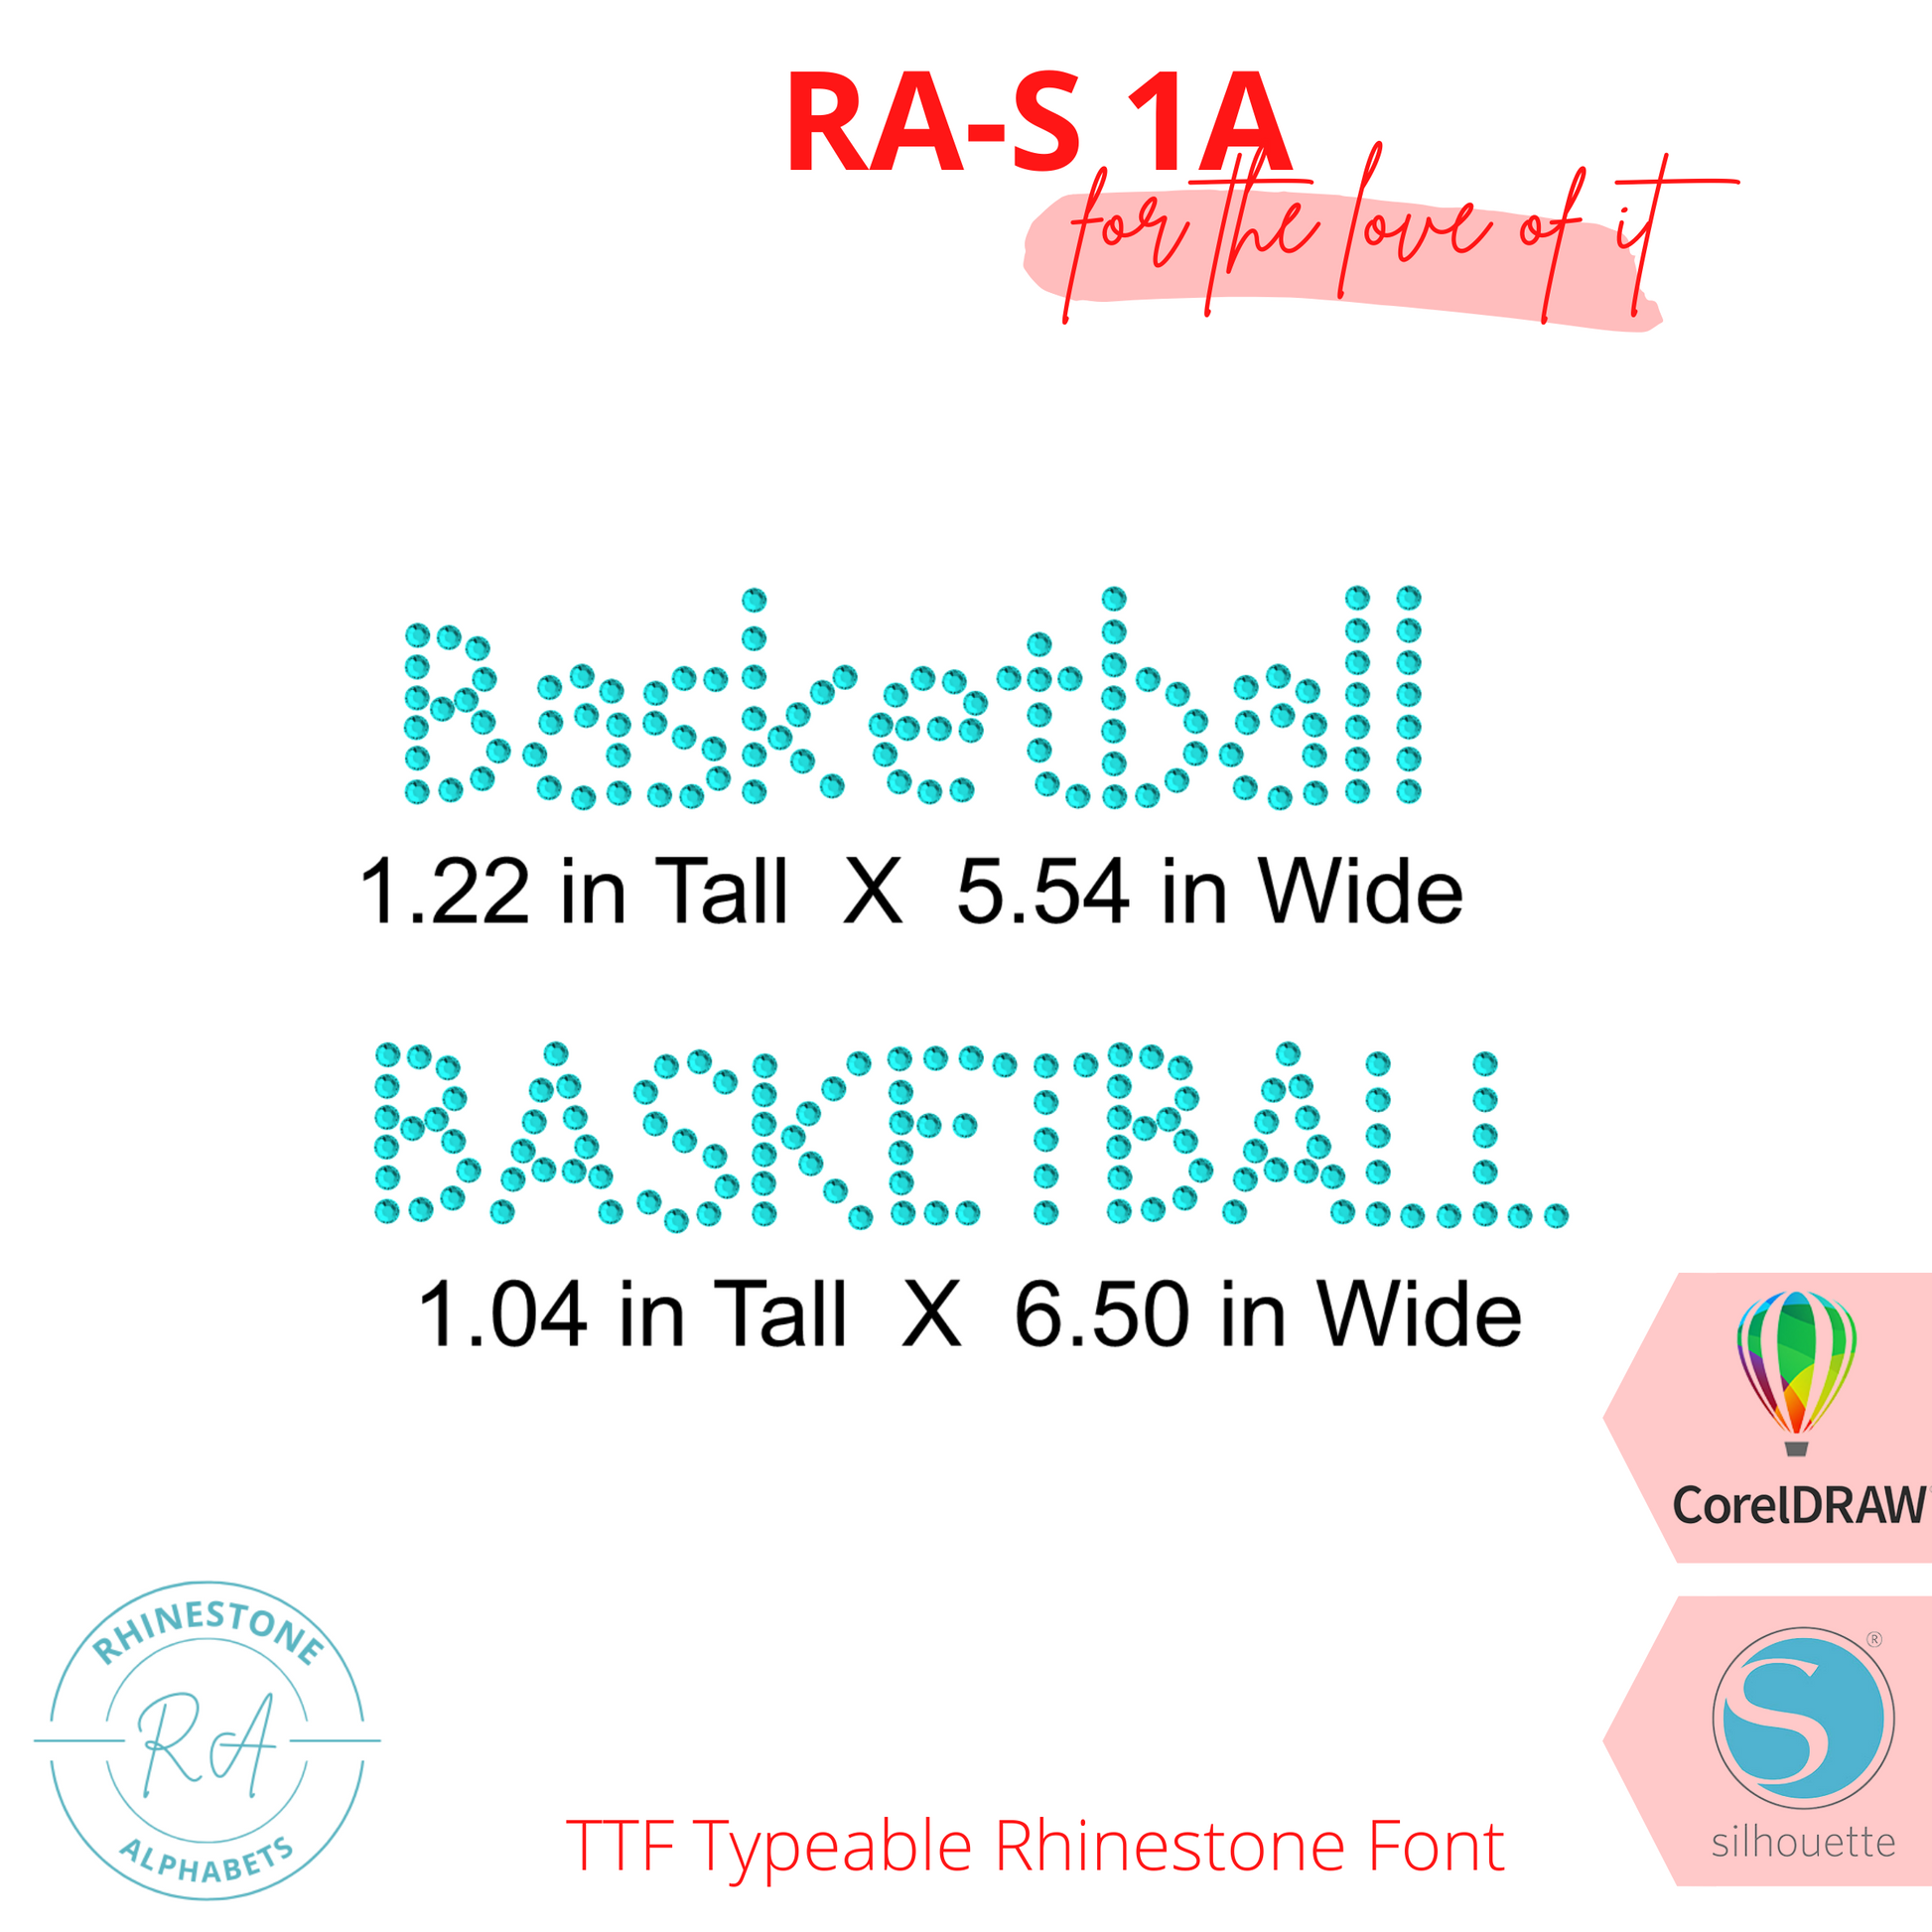 RA-S Round 1A - RhinestoneAlphabets